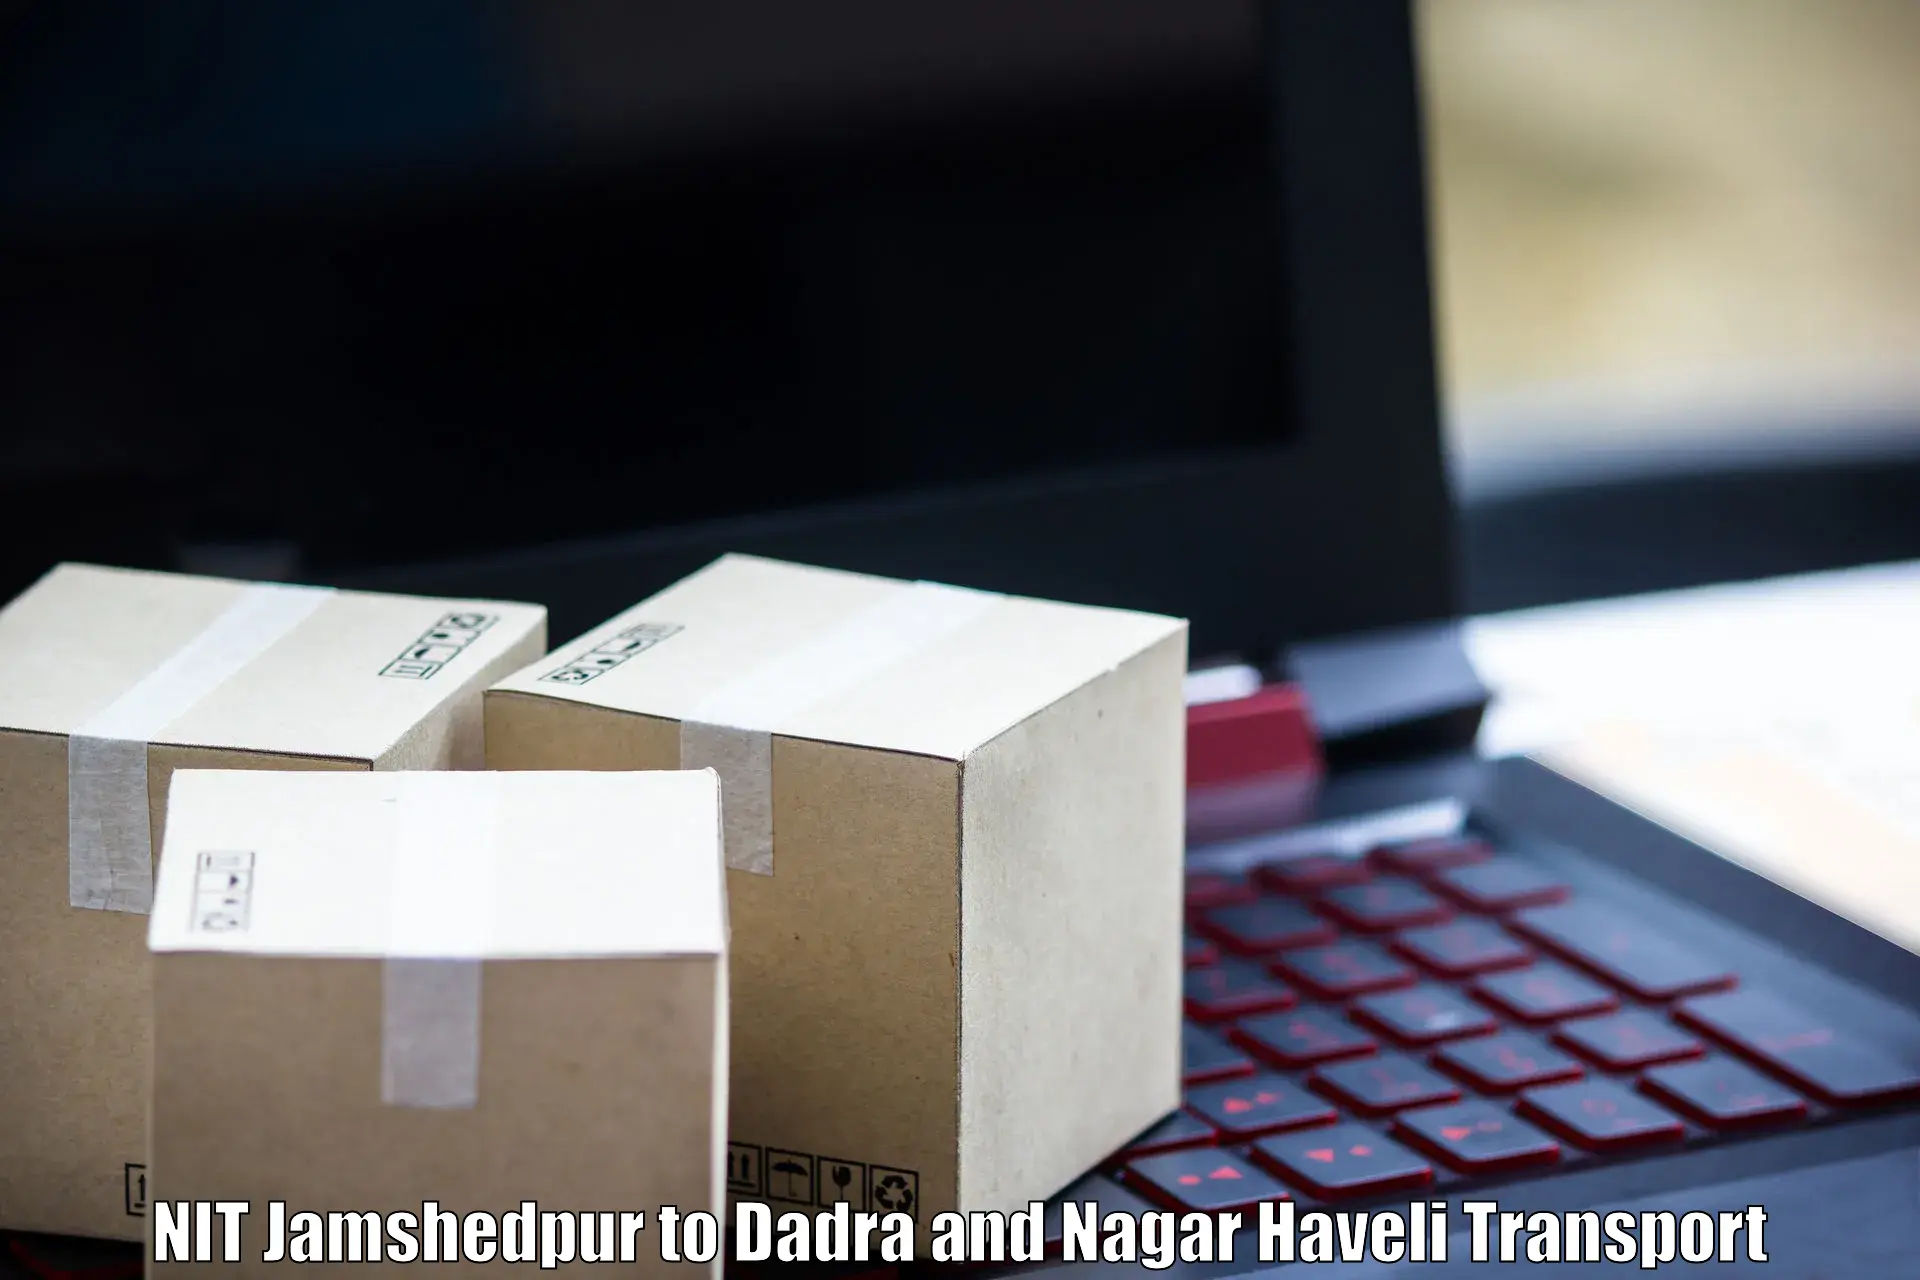 Express transport services NIT Jamshedpur to Dadra and Nagar Haveli